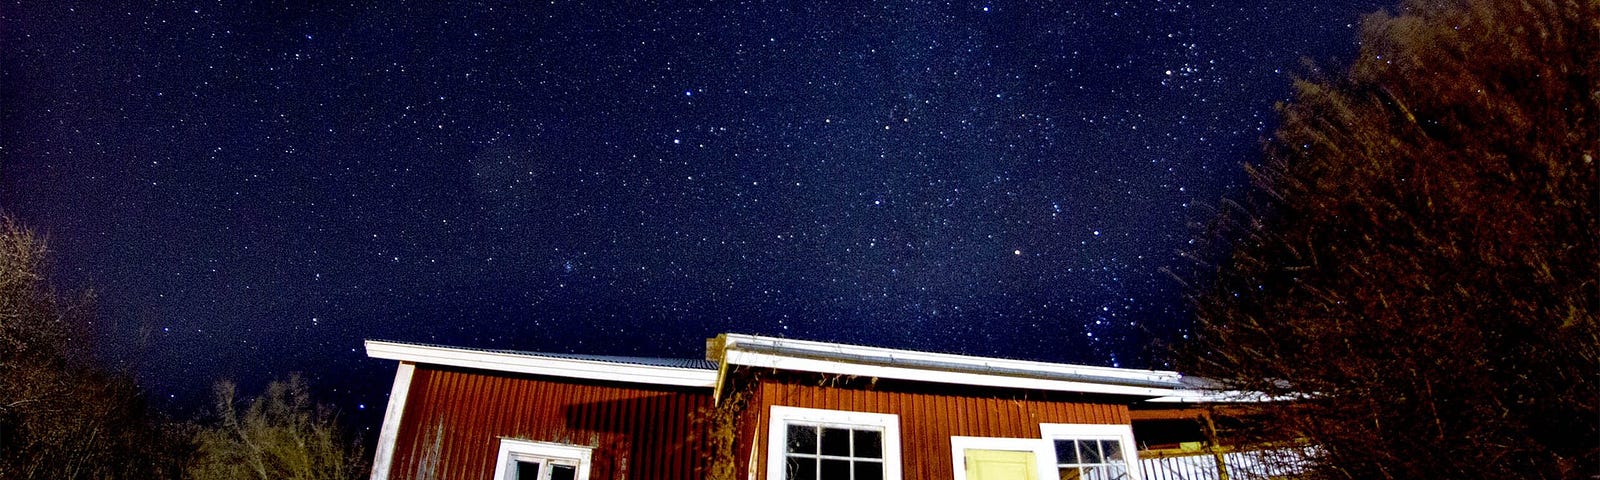 Very small house under a starry sky.